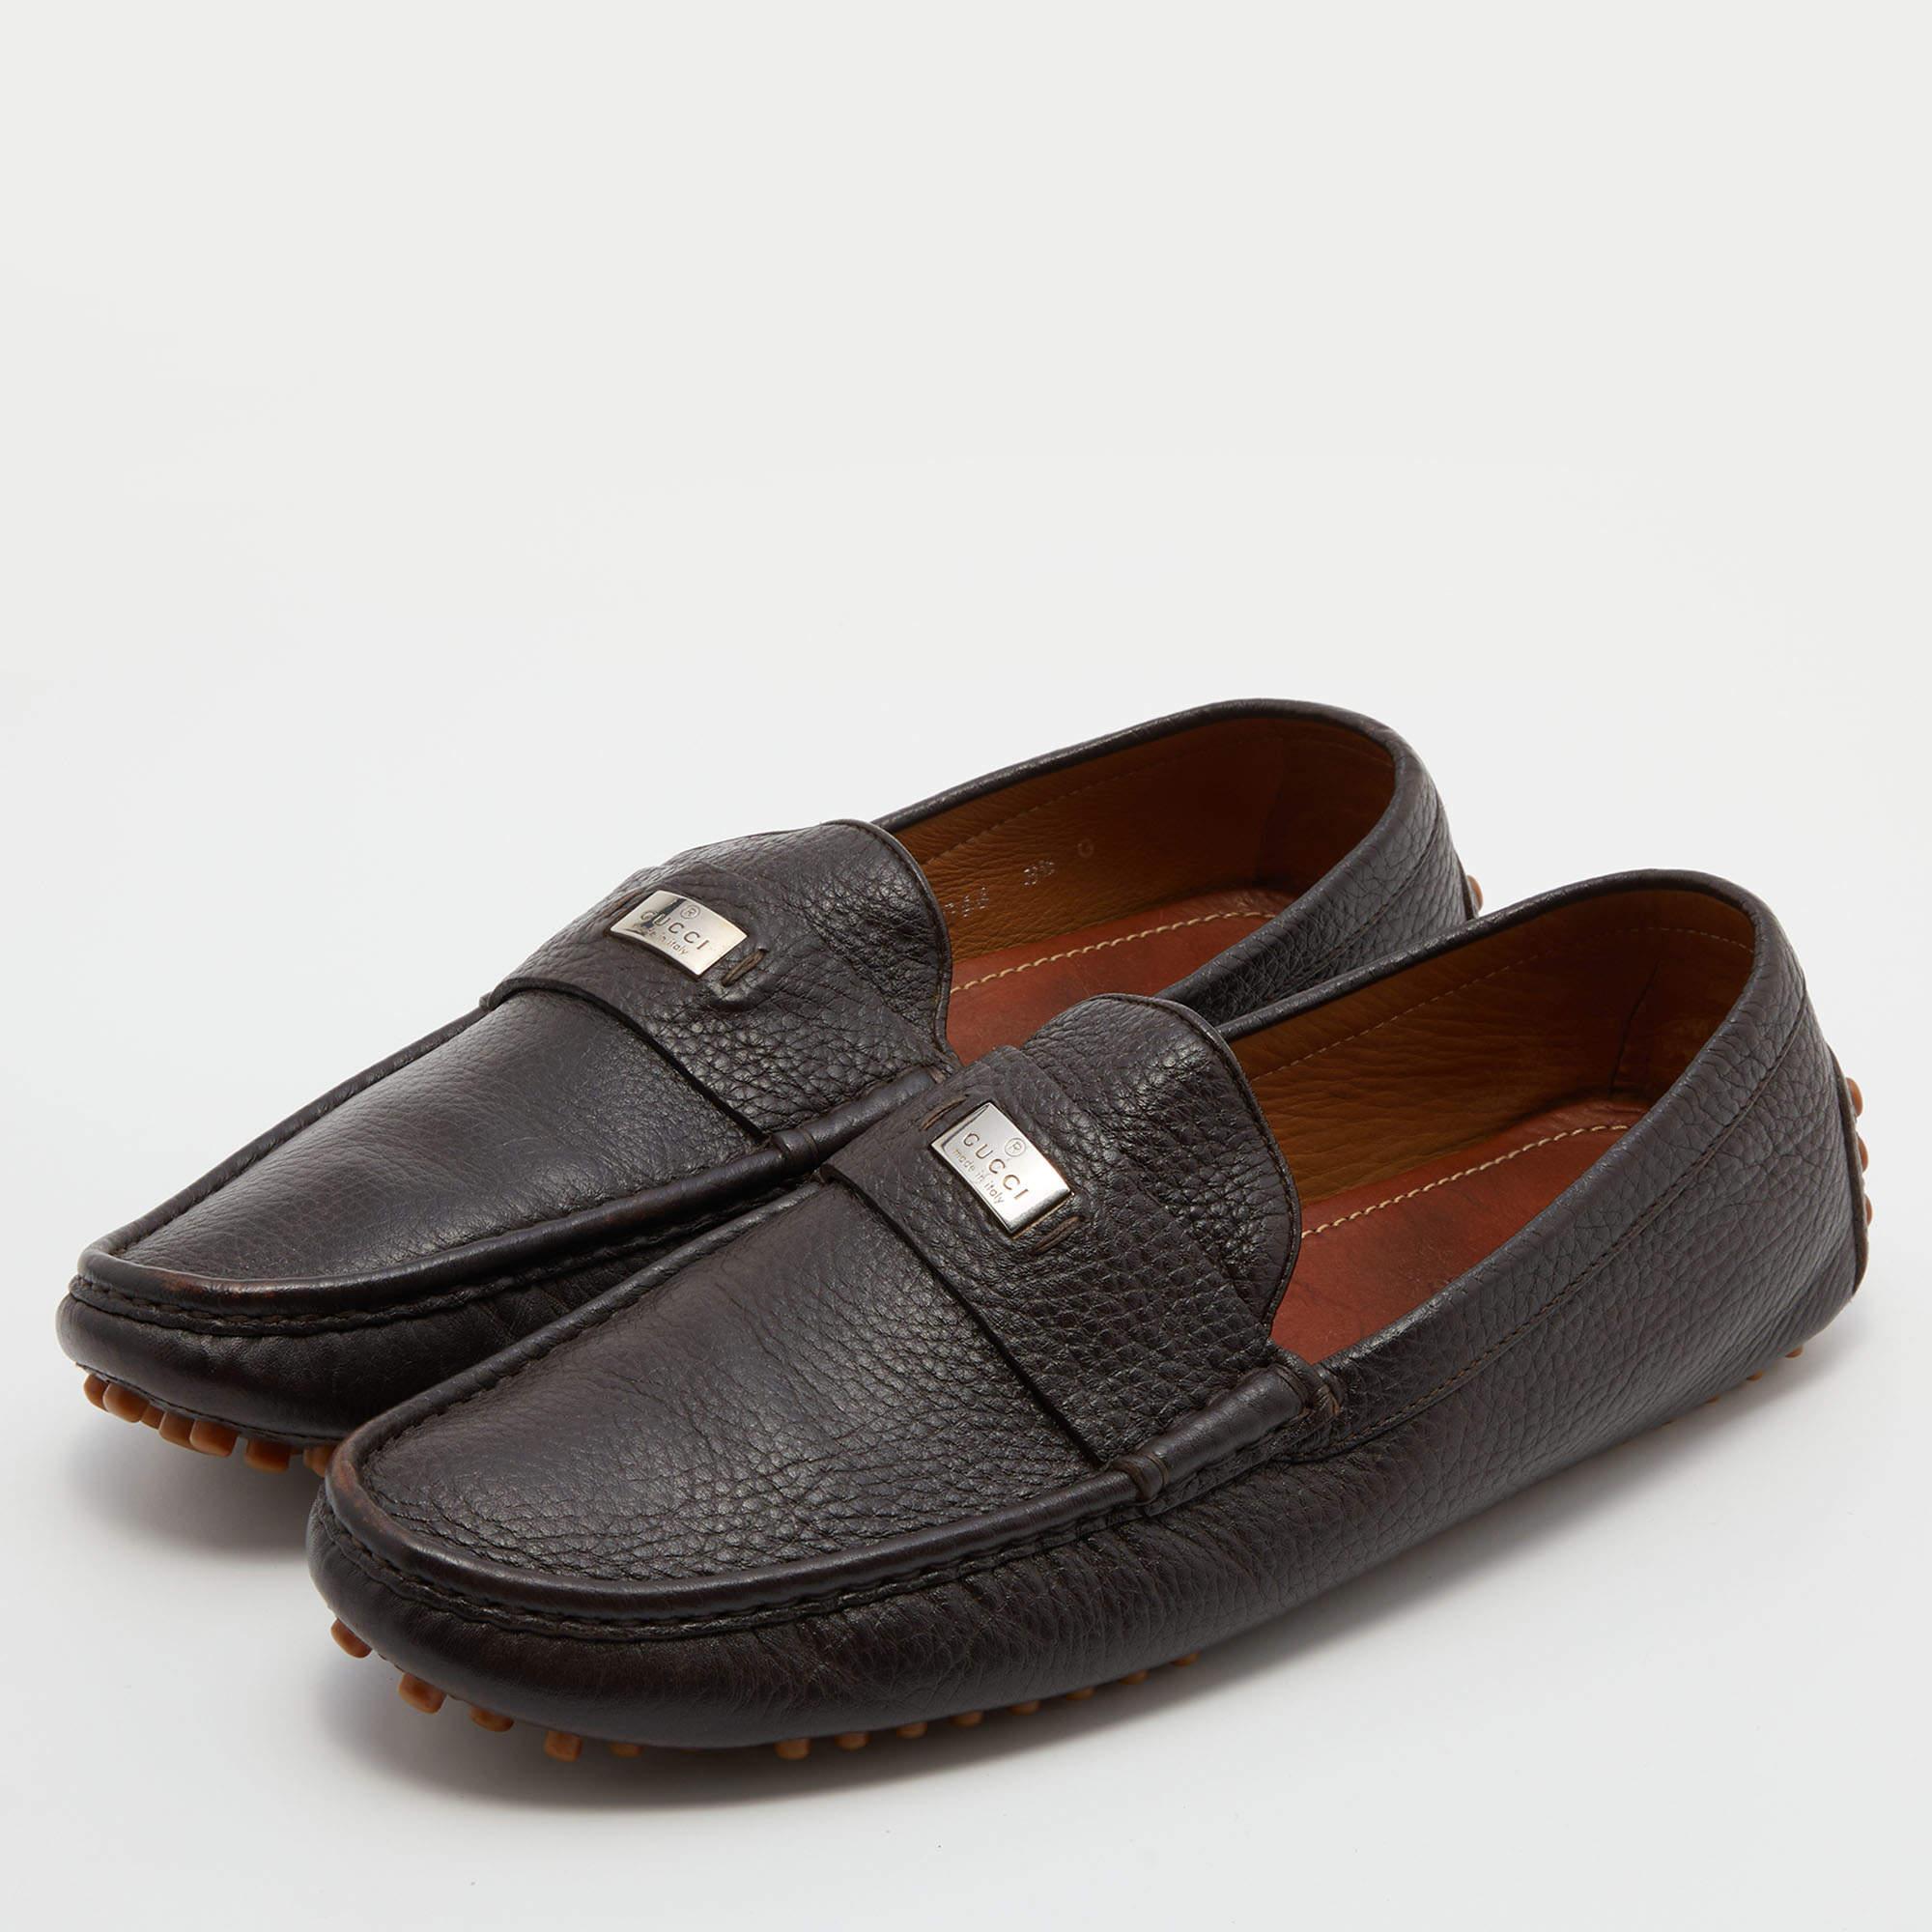 Gucci Dark Brown Leather Slip On Loafers Size 42.5 In Good Condition For Sale In Dubai, Al Qouz 2